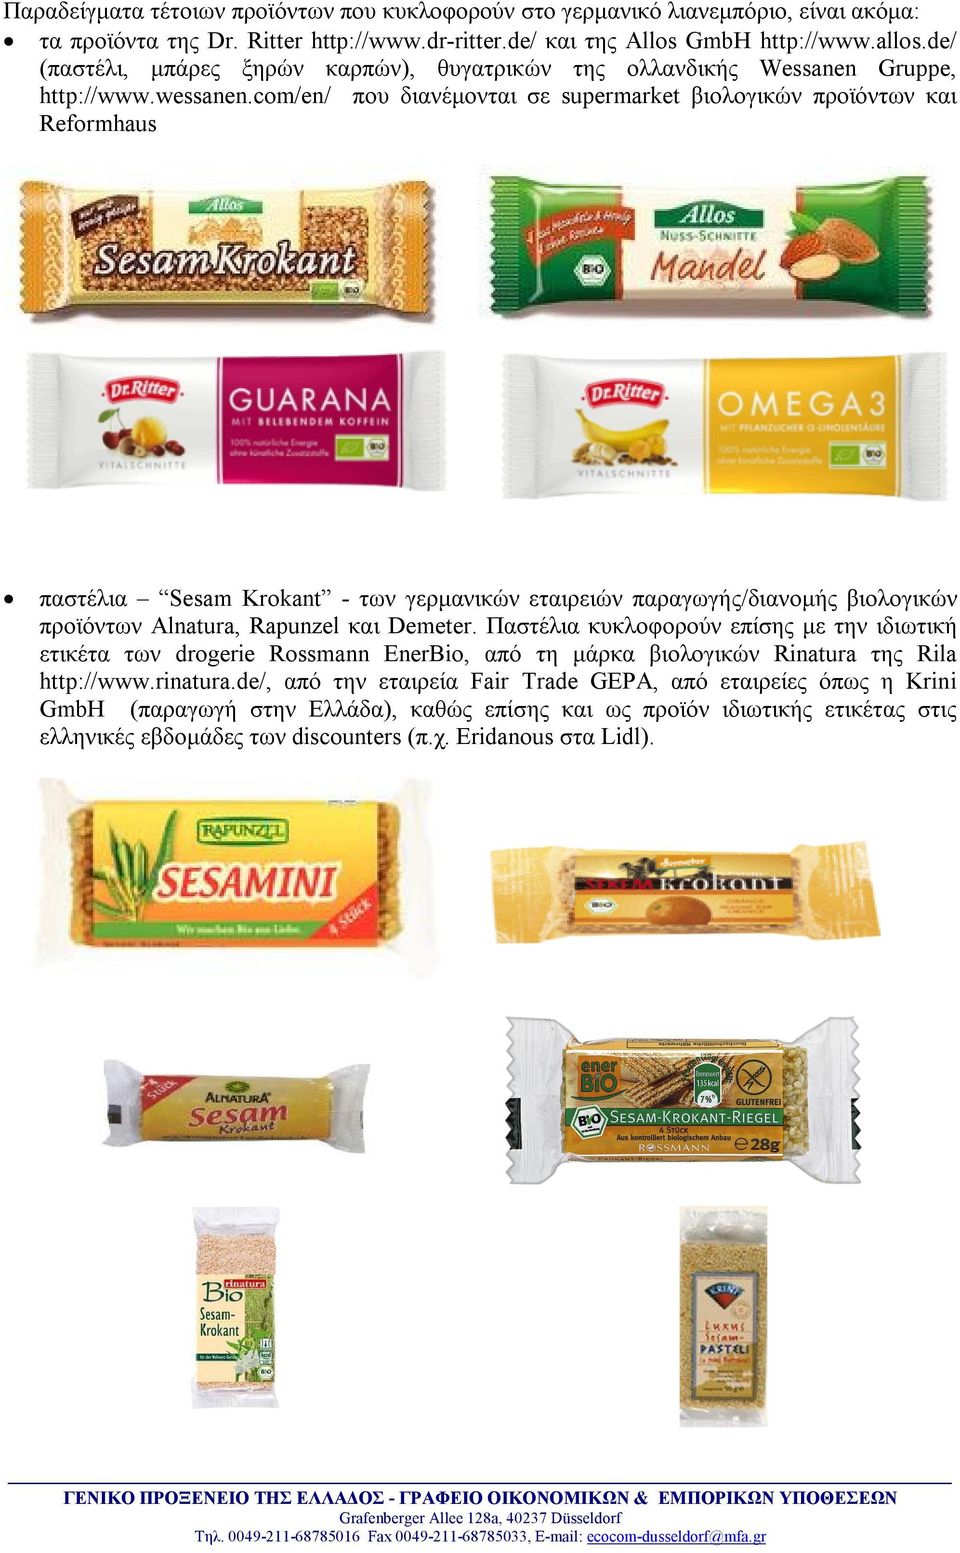 com/en/ που διανέμονται σε supermarket βιολογικών προϊόντων και Reformhaus παστέλια Sesam Krokant - των γερμανικών εταιρειών παραγωγής/διανομής βιολογικών προϊόντων Alnatura, Rapunzel και Demeter.